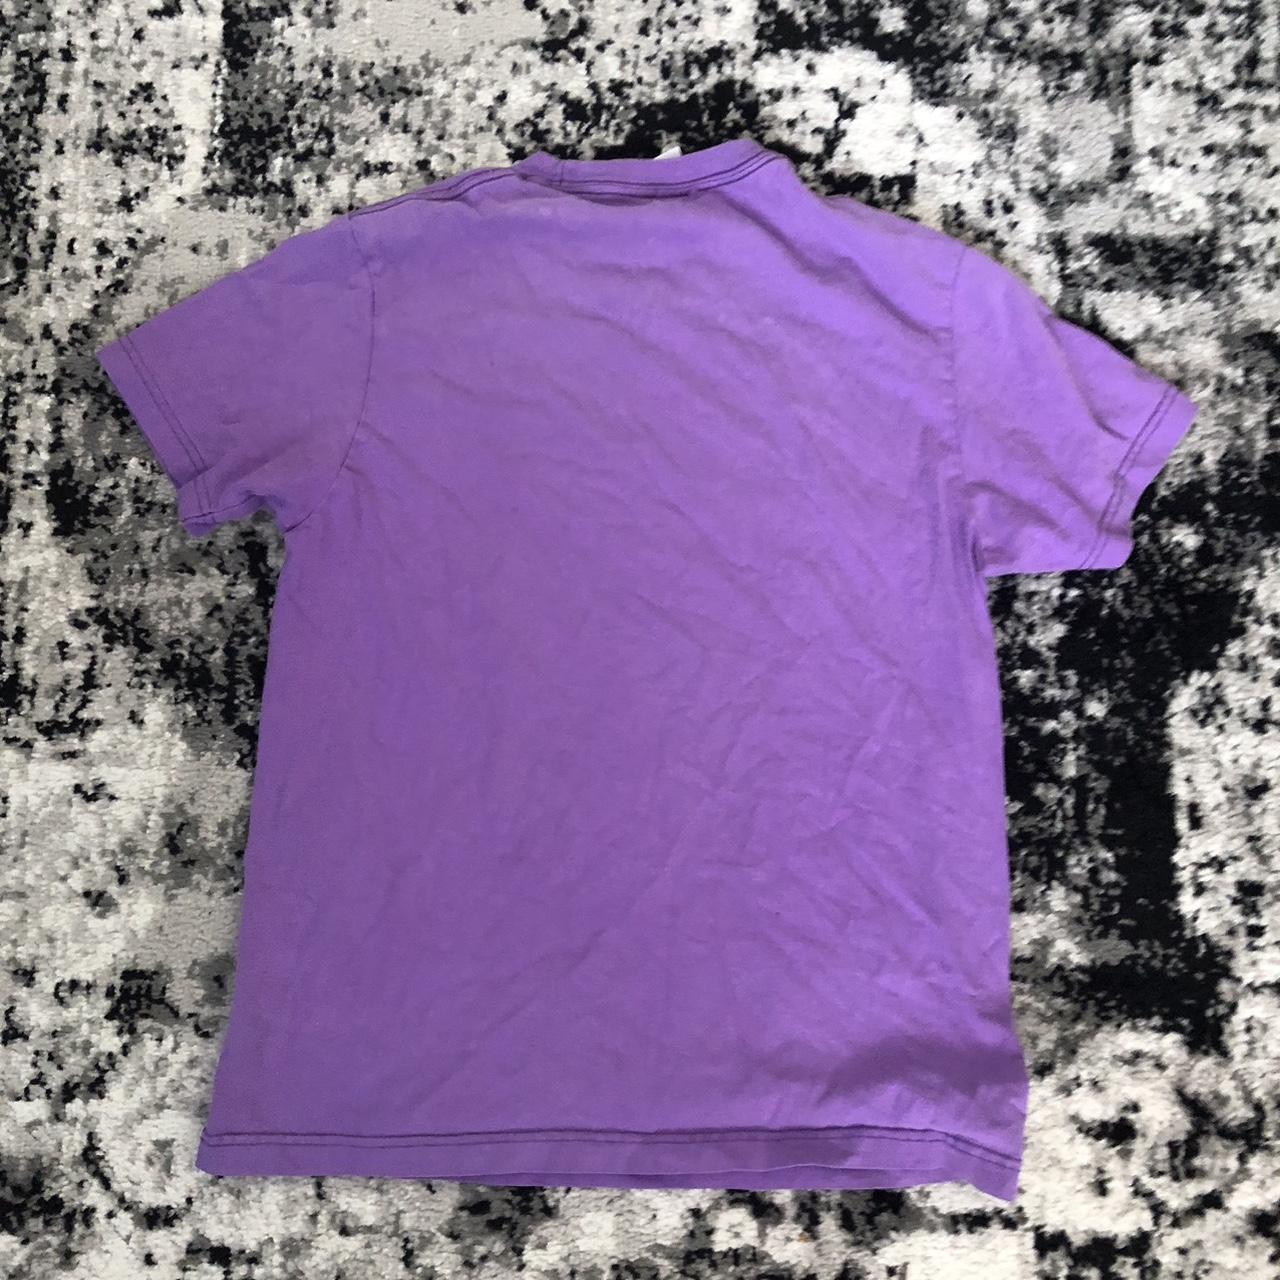 Supreme motion blur logo tee purple size s fits rlly... - Depop